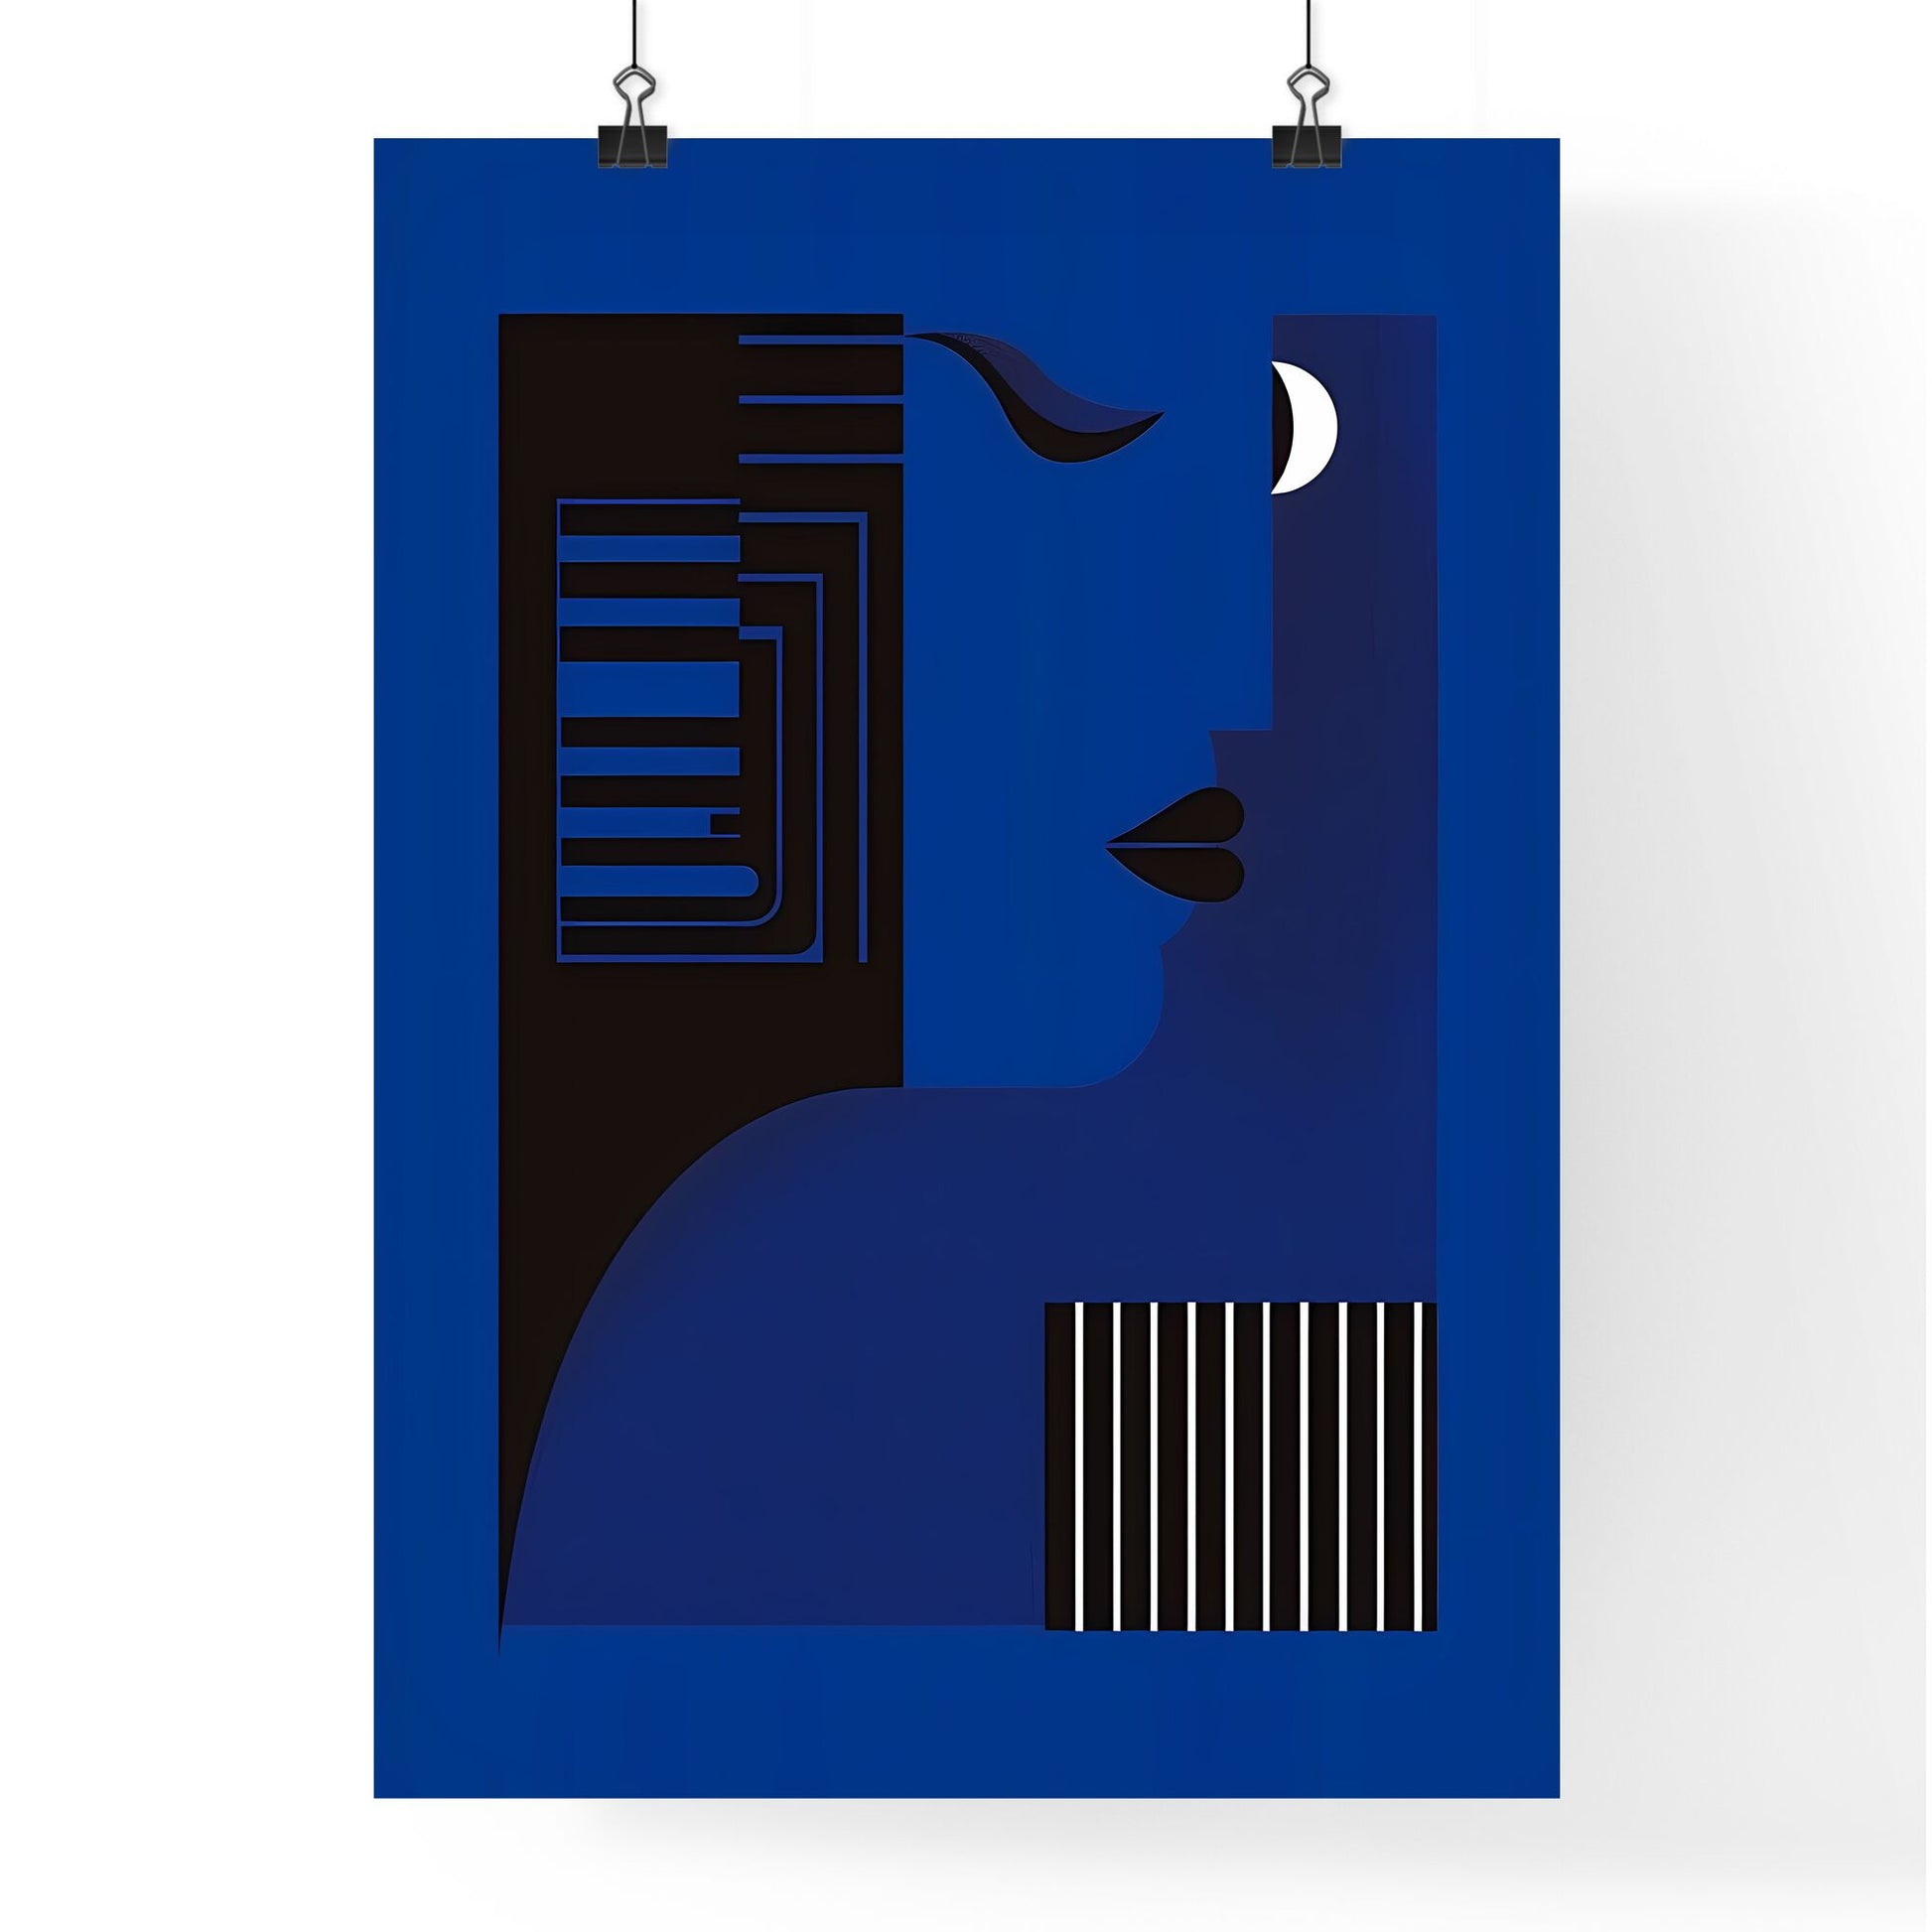 Modern Geometric Bauhaus Style Art Piece with Vibrant Blue and Black Shapes Default Title